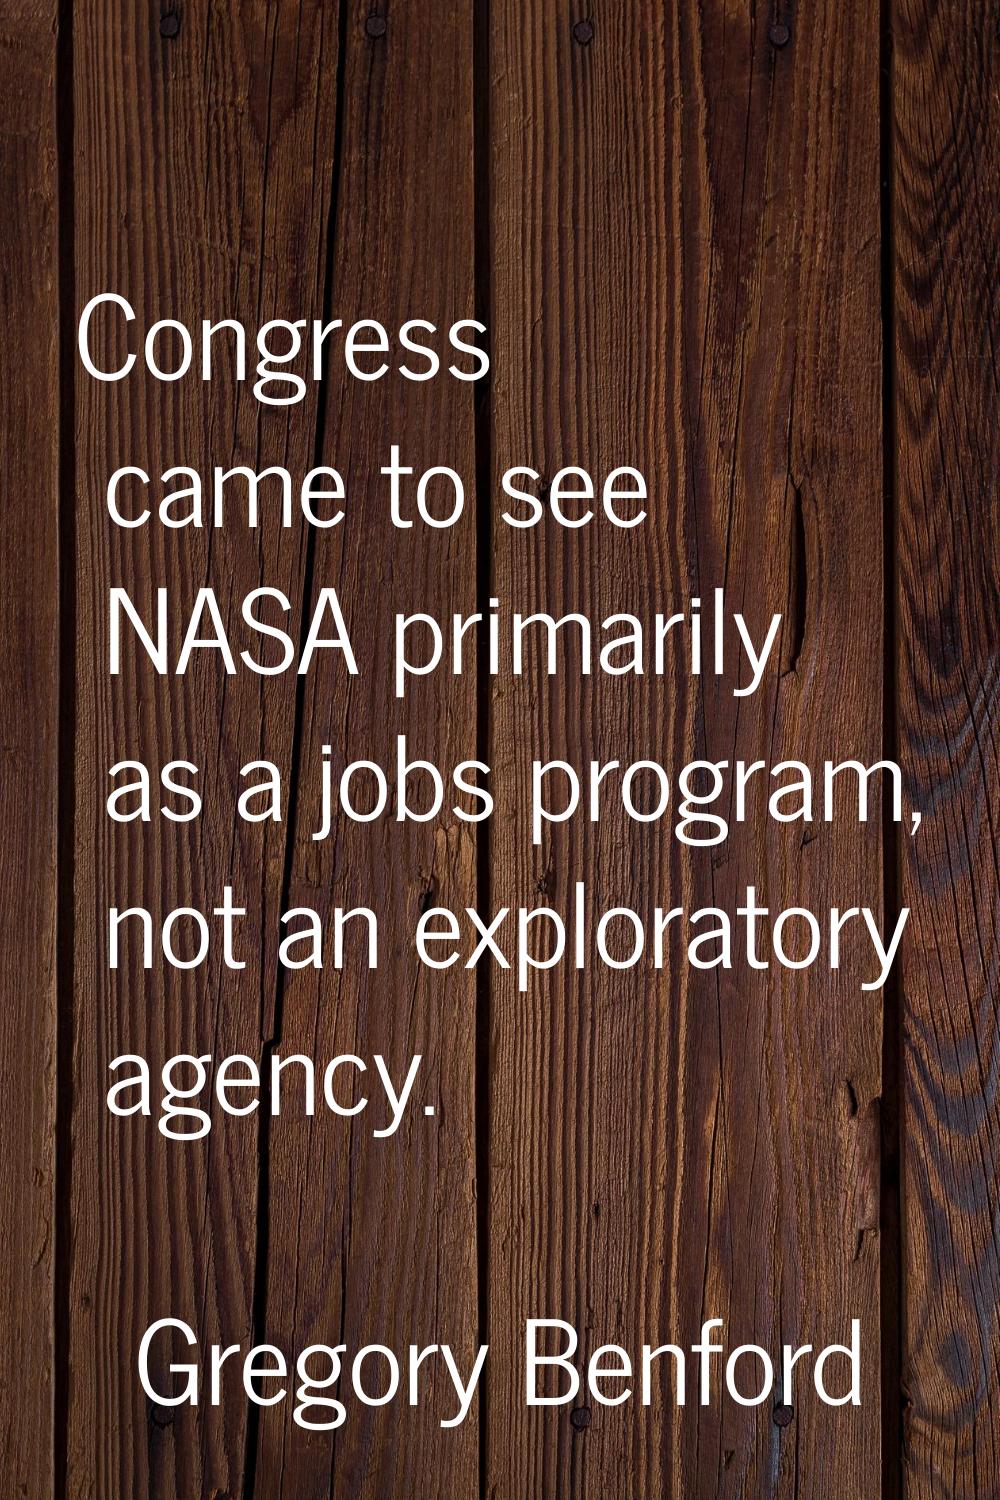 Congress came to see NASA primarily as a jobs program, not an exploratory agency.